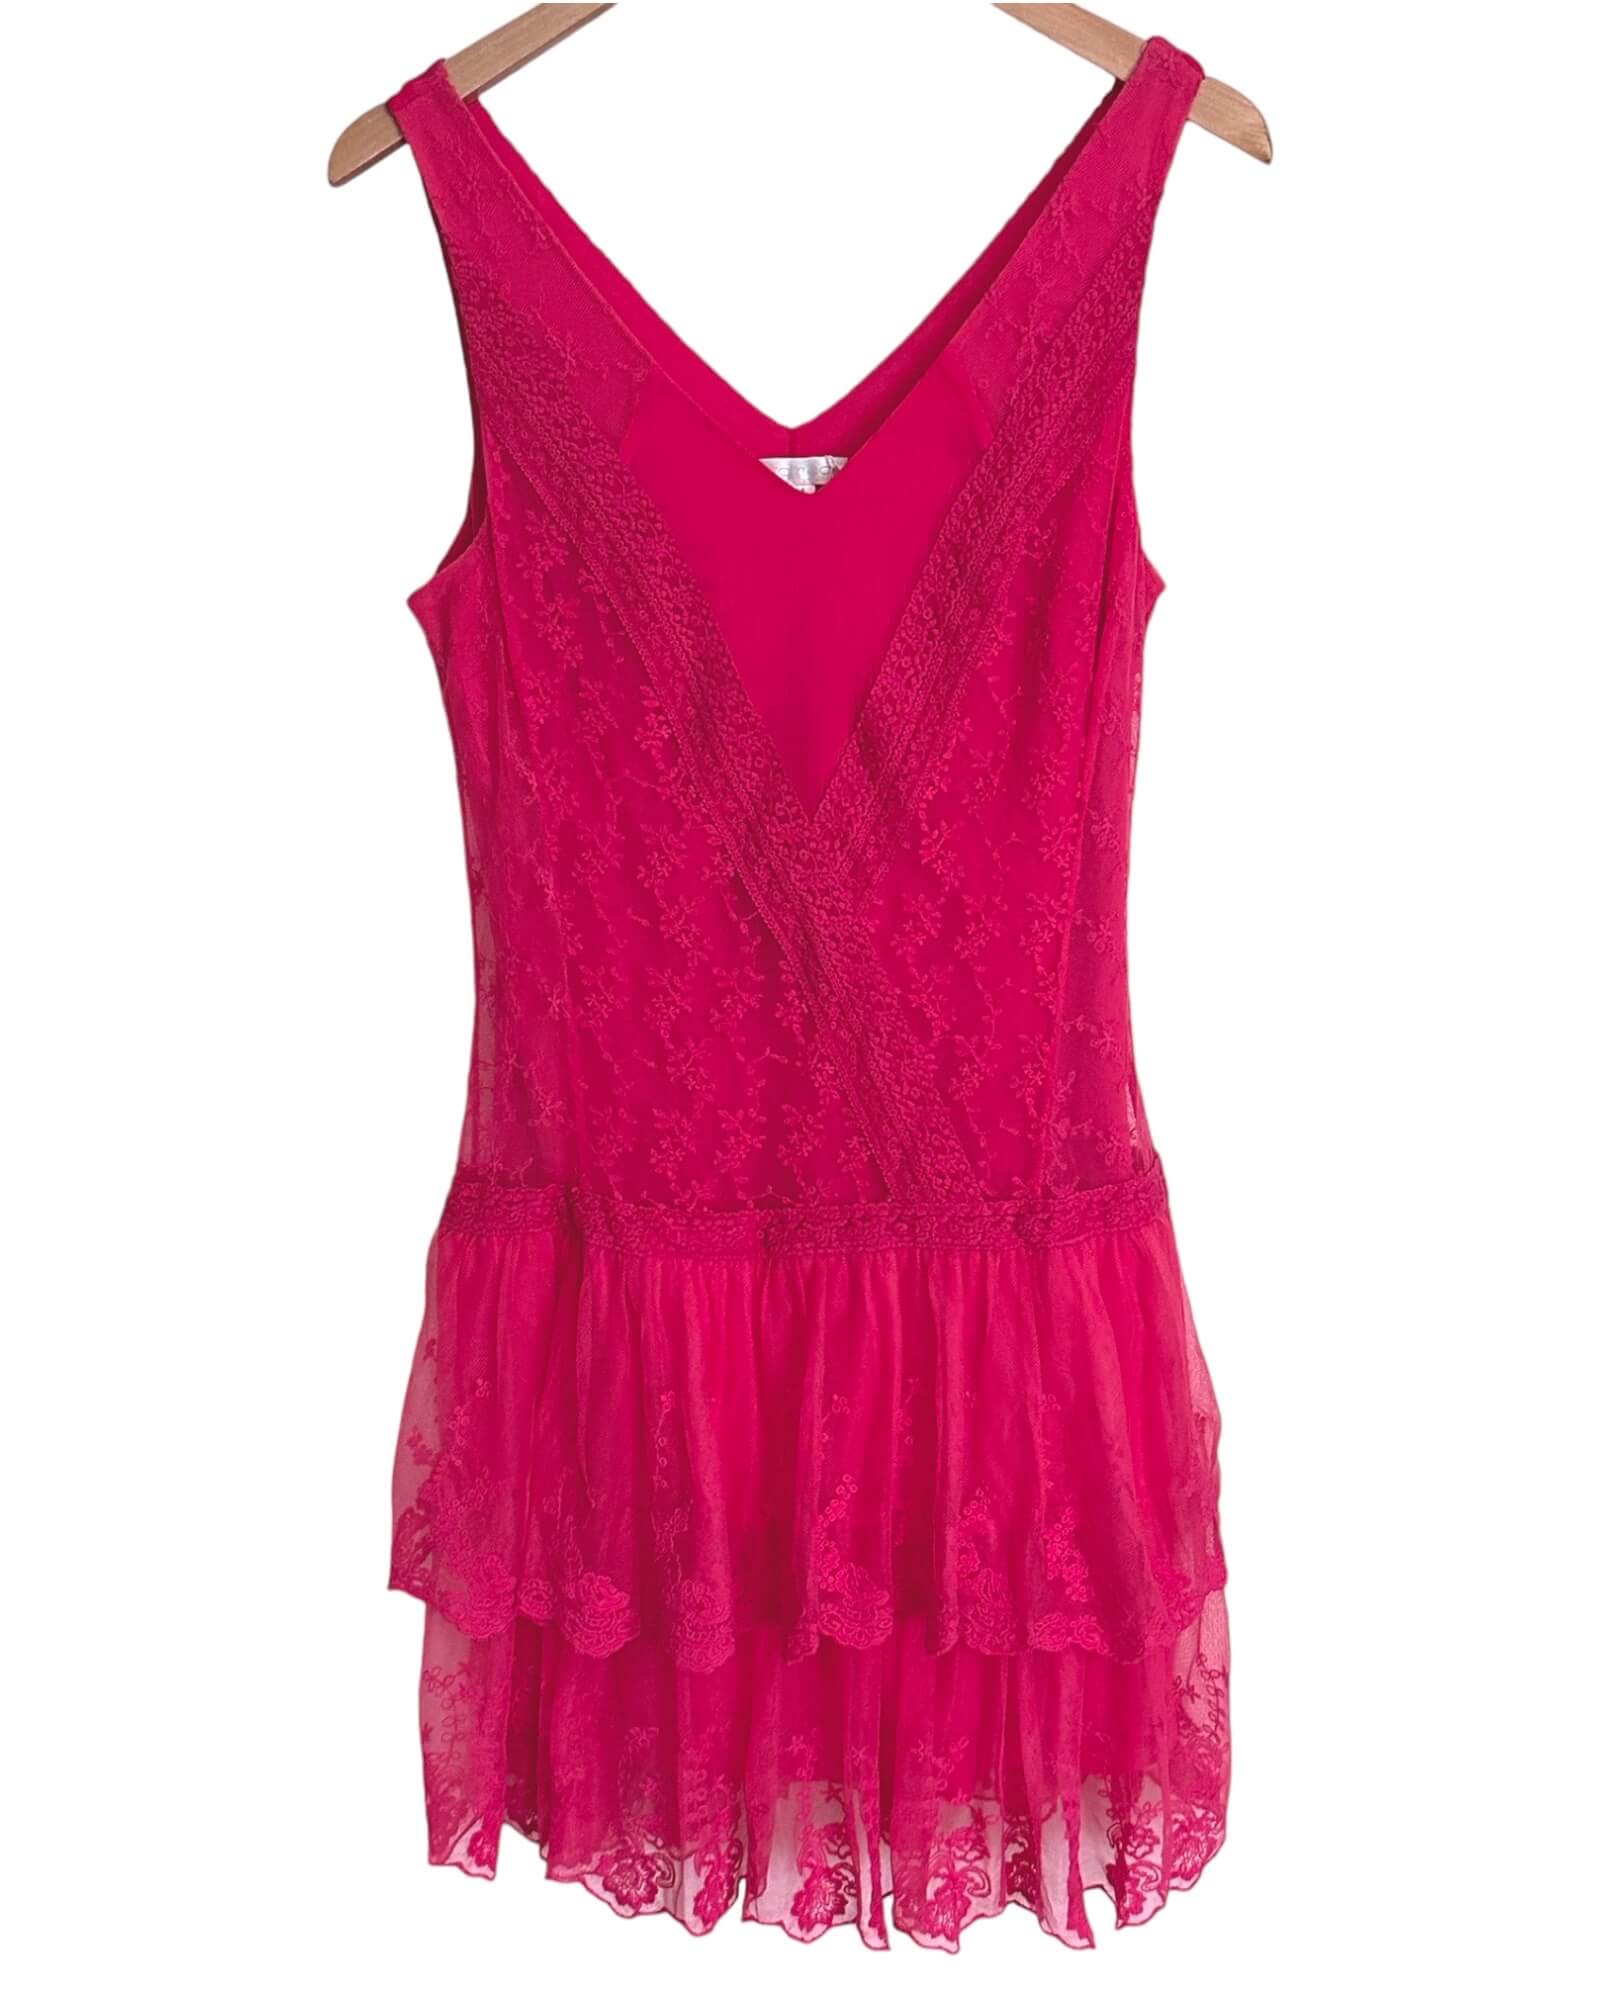 Light Spring PROMOD raspberry pink lace ruffle dress